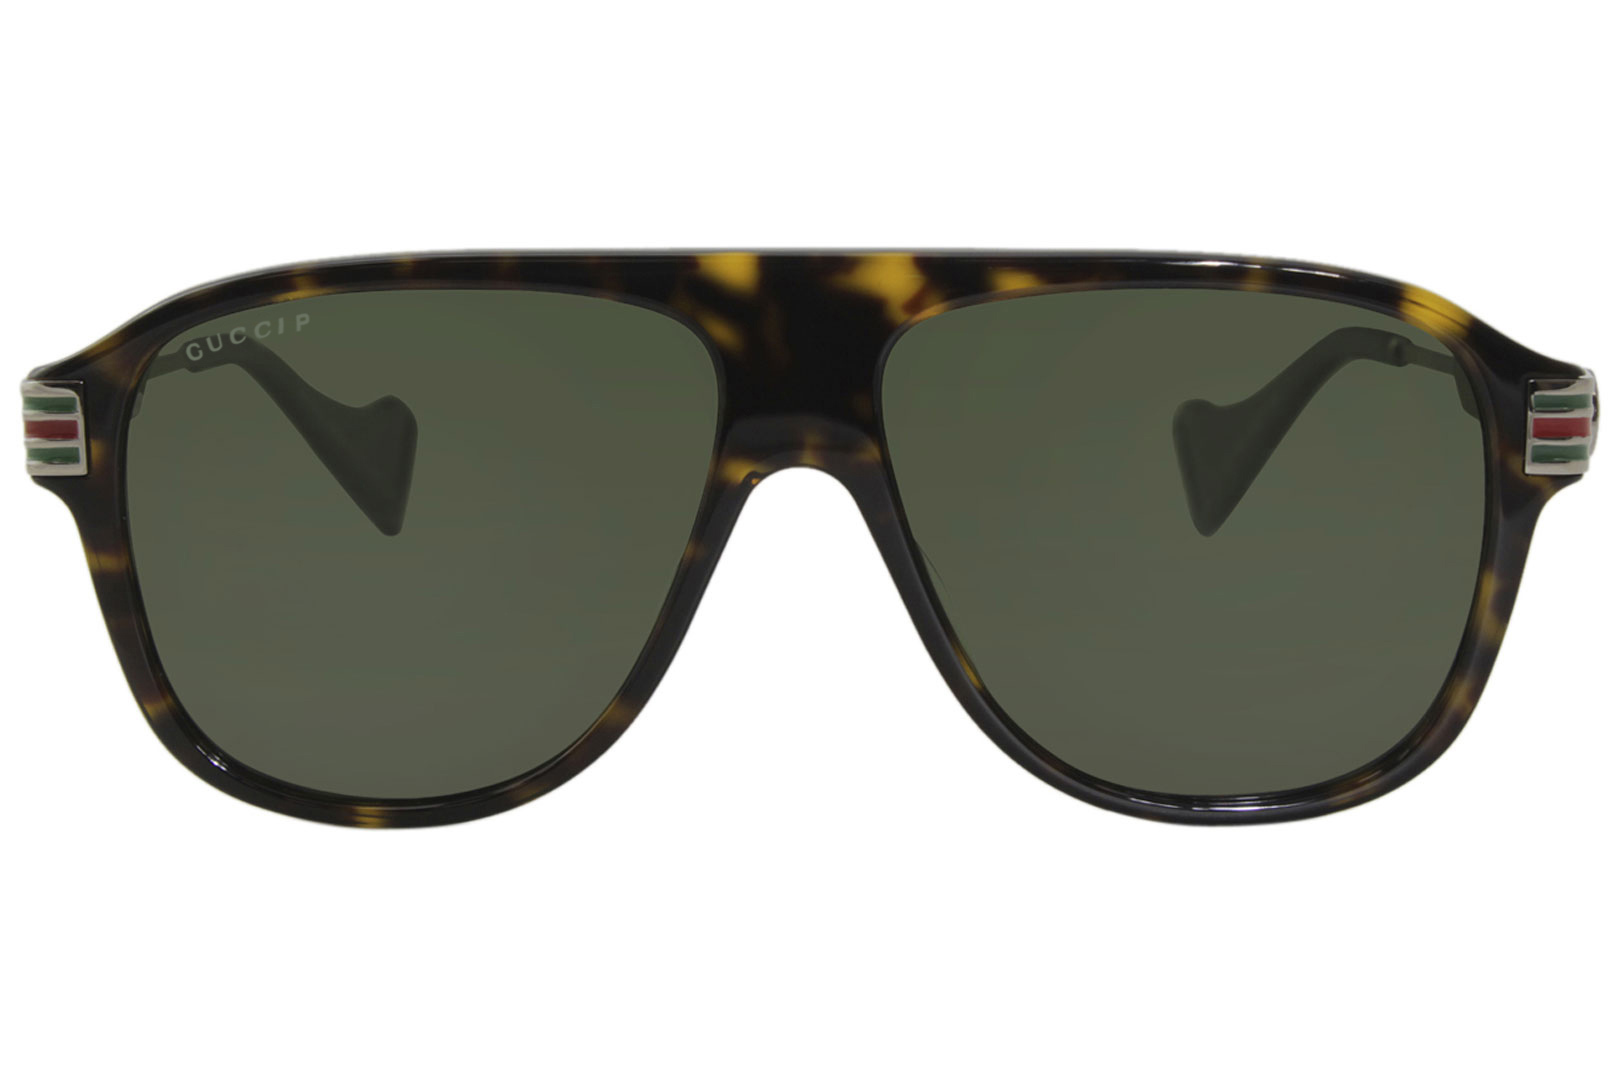 Gucci Gg0587s 002 Sunglasses Men S Havana Silver Green Lenses Polarized Pilot